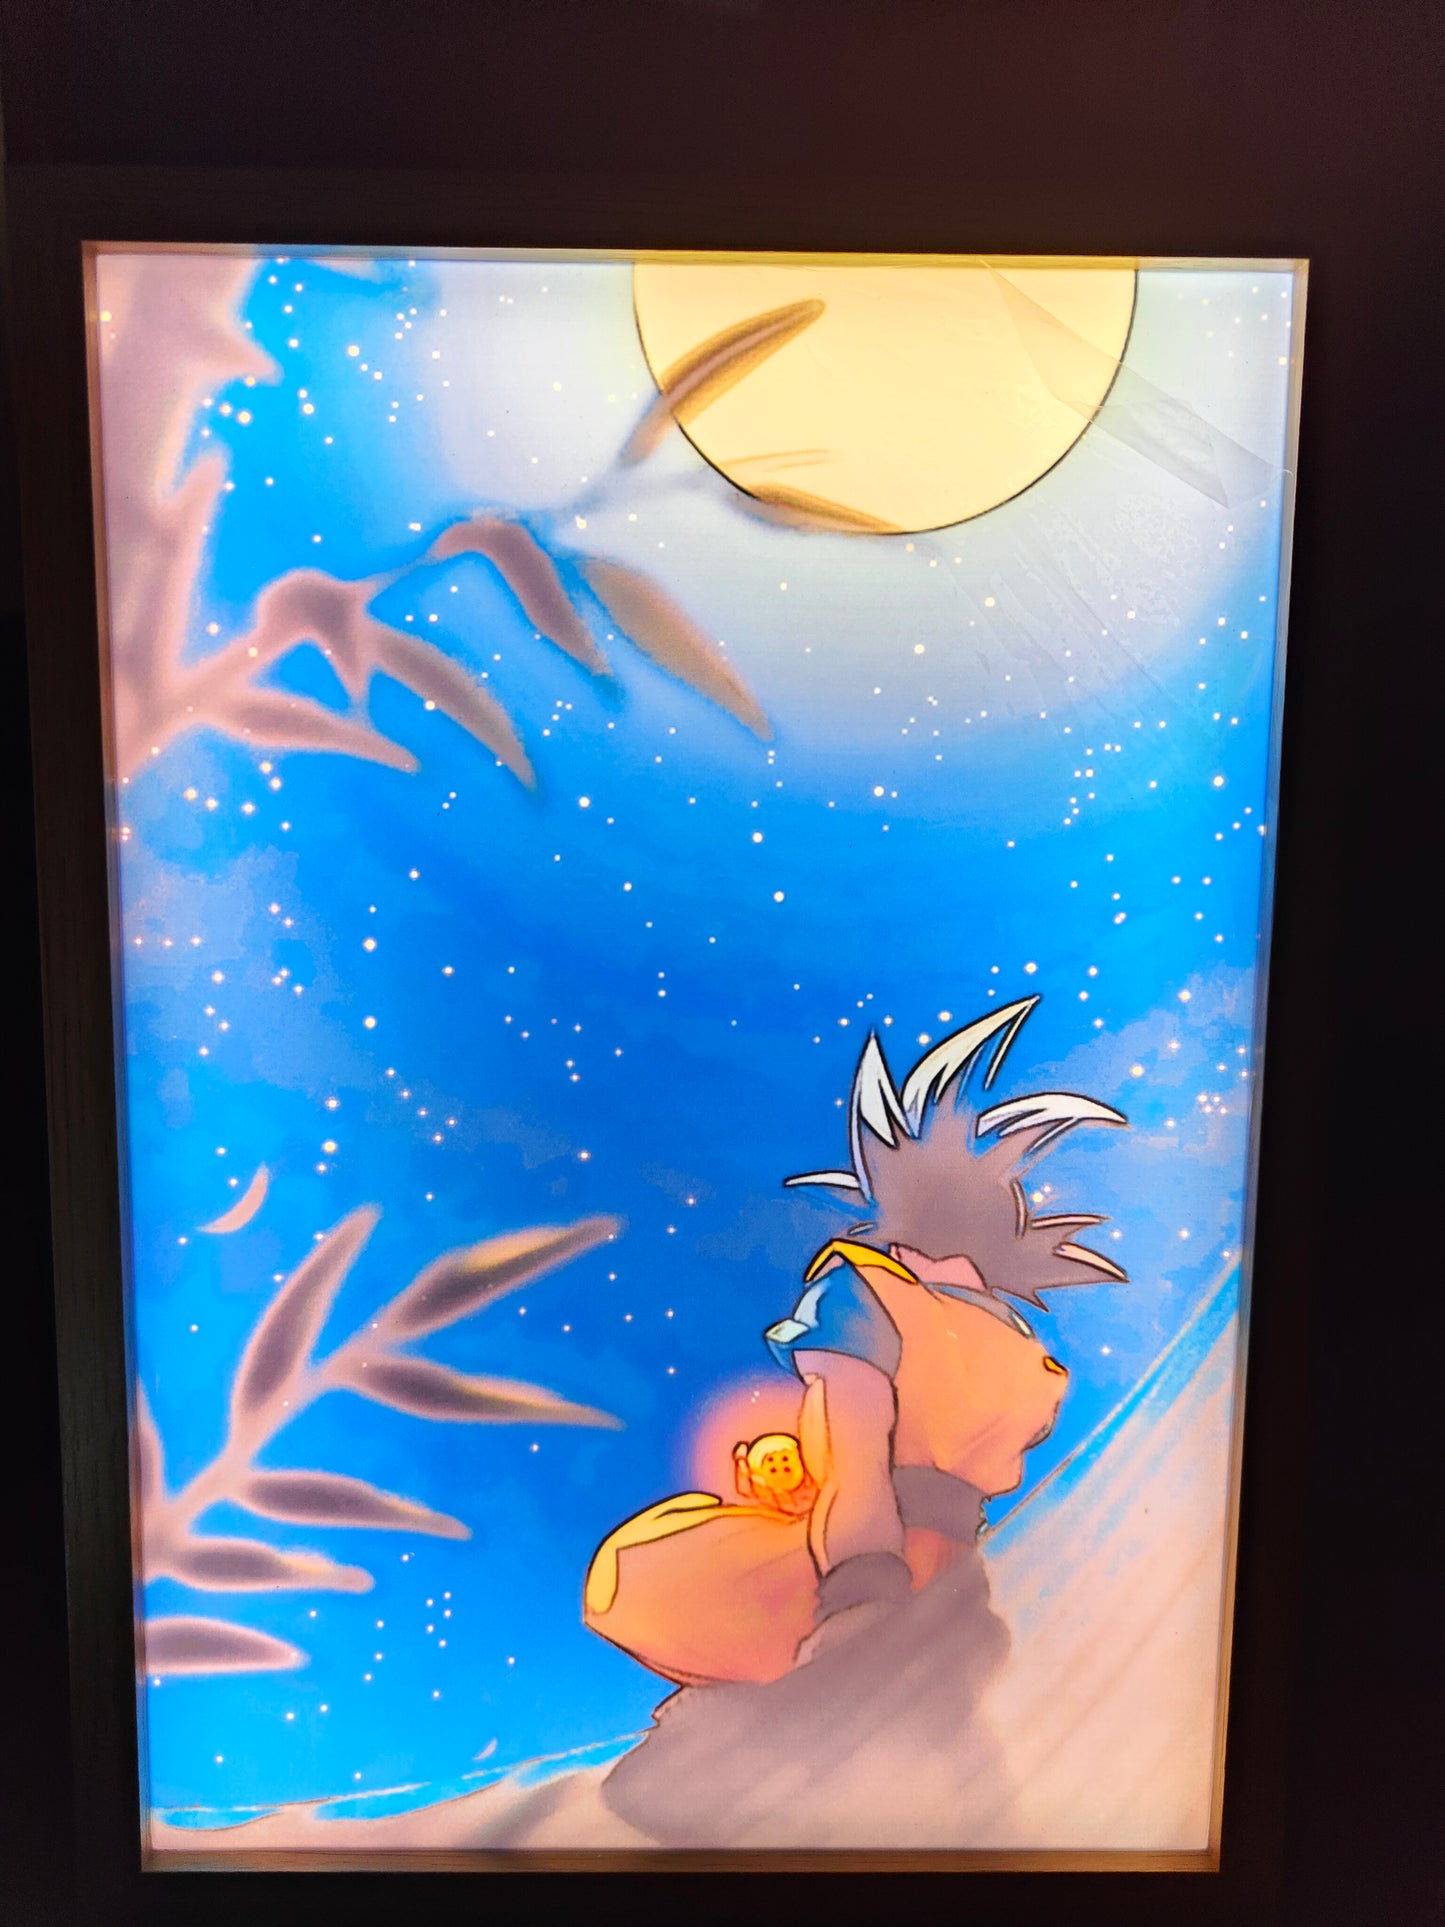 Dragon Ball (DBZ) - Goku Sitting in the Night Light Up Frame Art Portrait